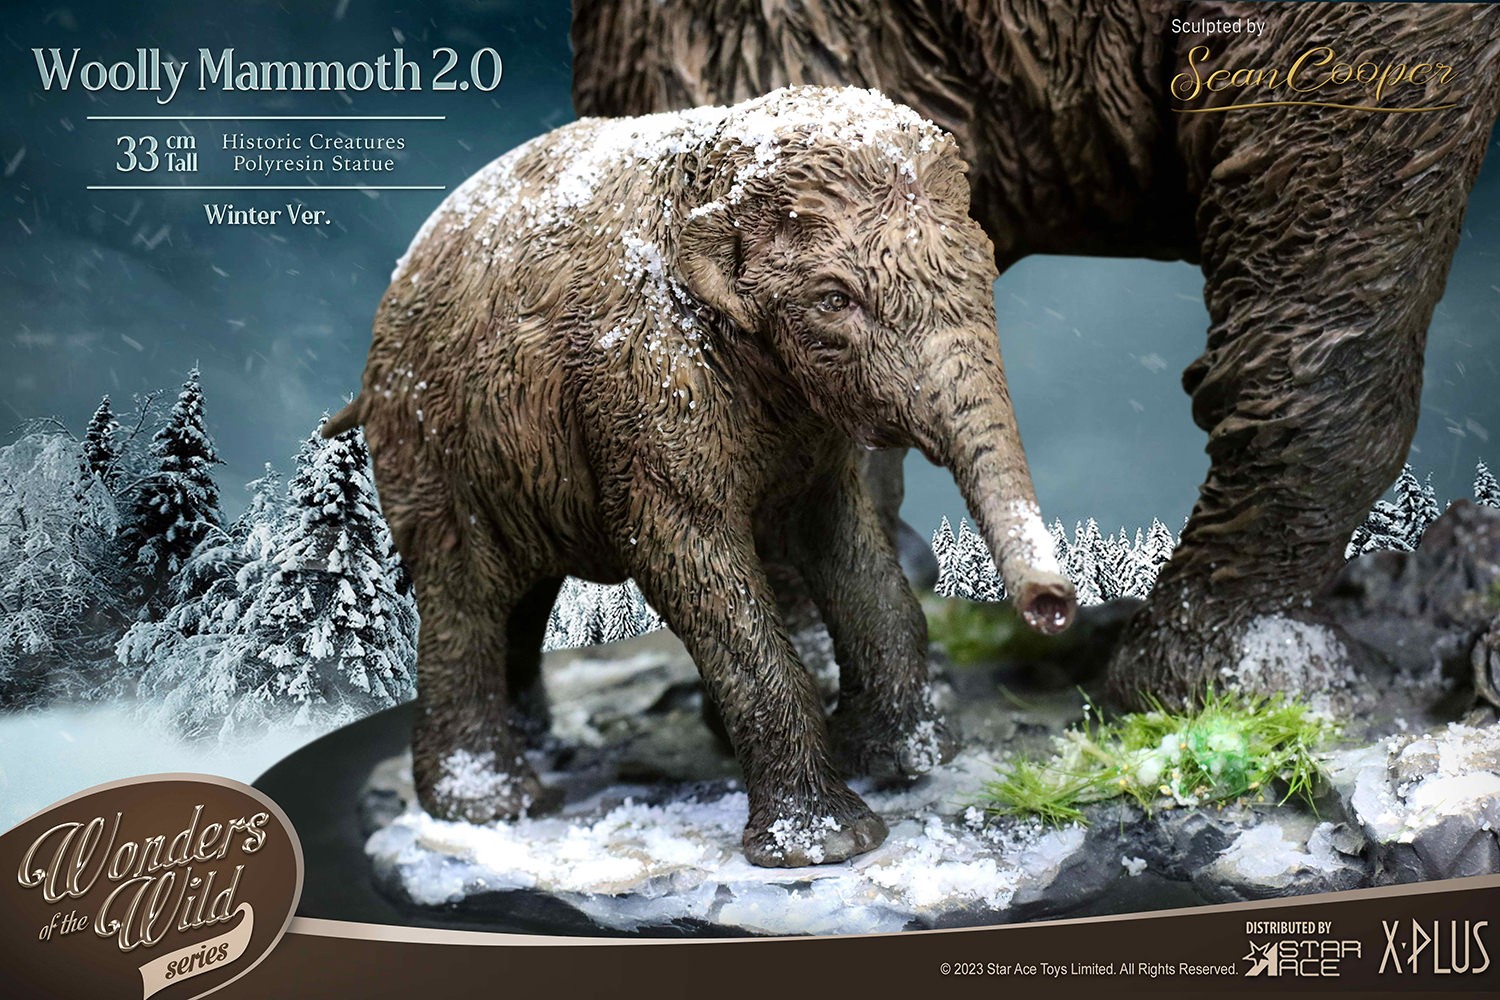 Woolly Mammoth 2.0 (Winter Version)- Prototype Shown